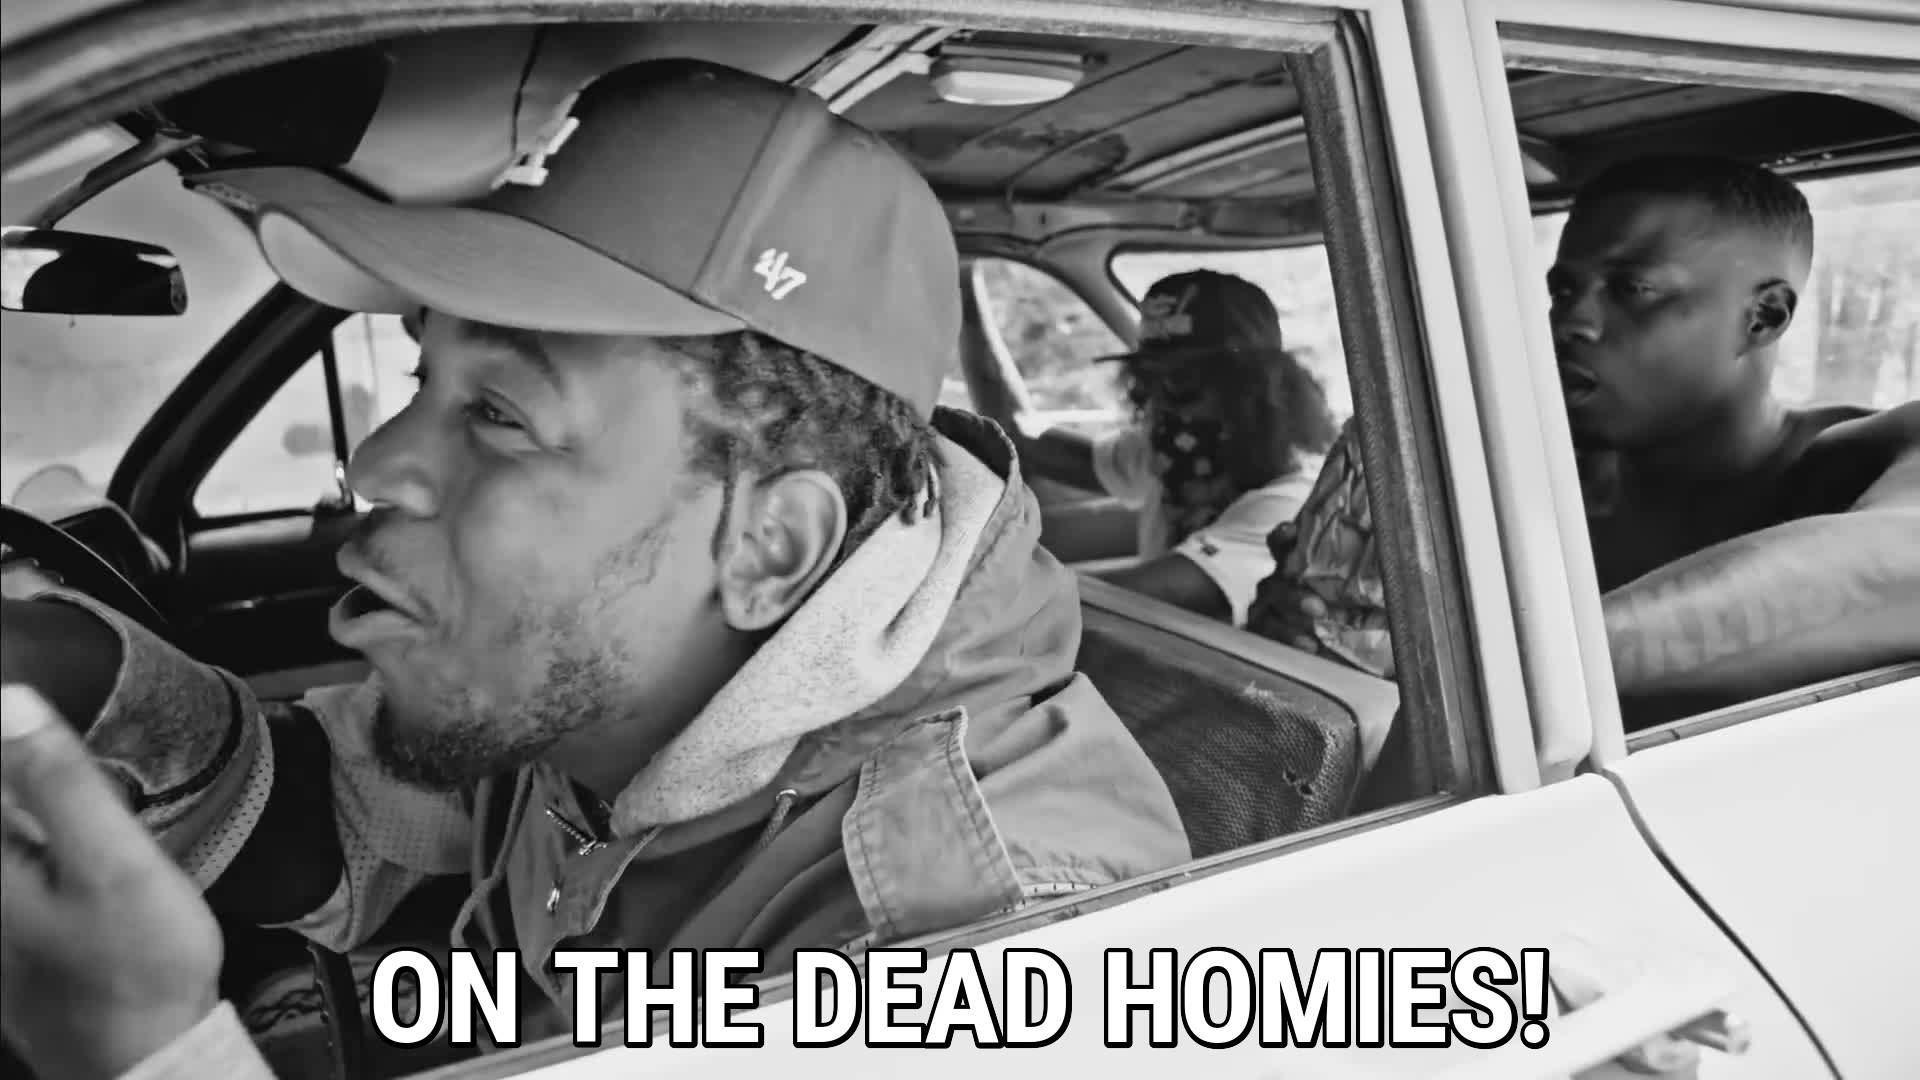 On the dead homies! / Kendrick Lamar